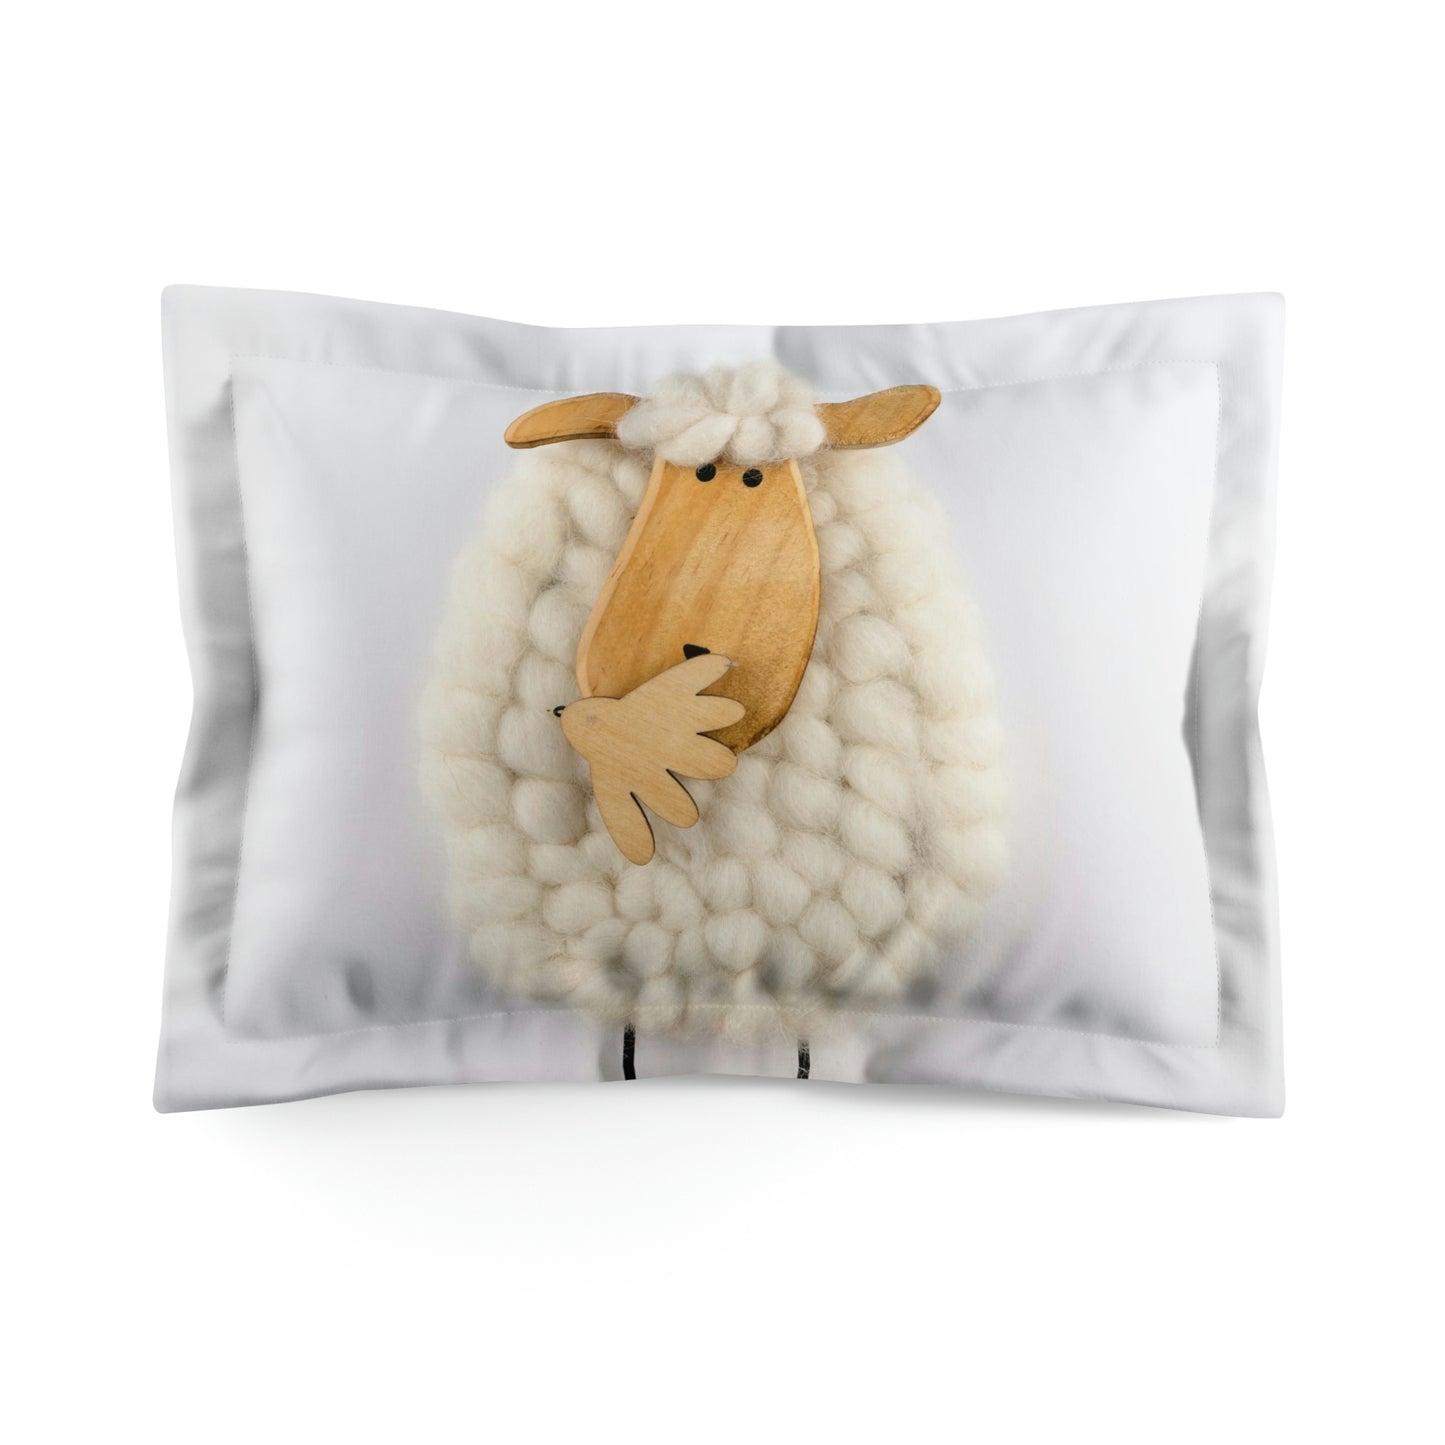 Pillow Sham "Oops  Did I Wake You Up Sheep" / Microfiber Pillow Sham